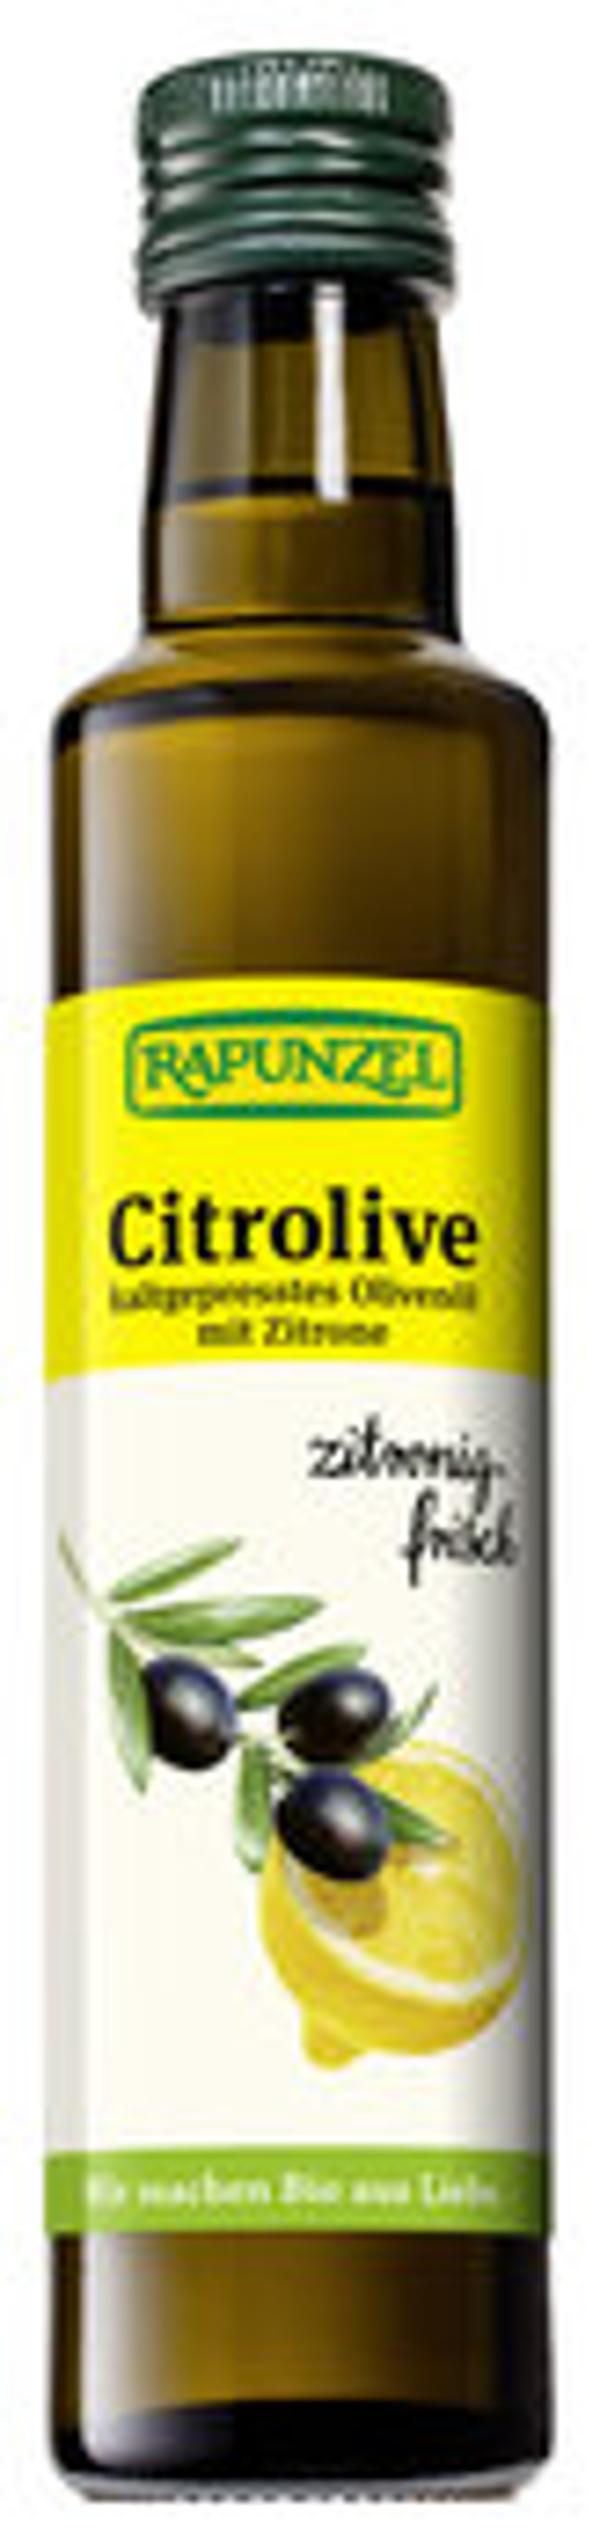 Produktfoto zu Citrolive, 250 ml